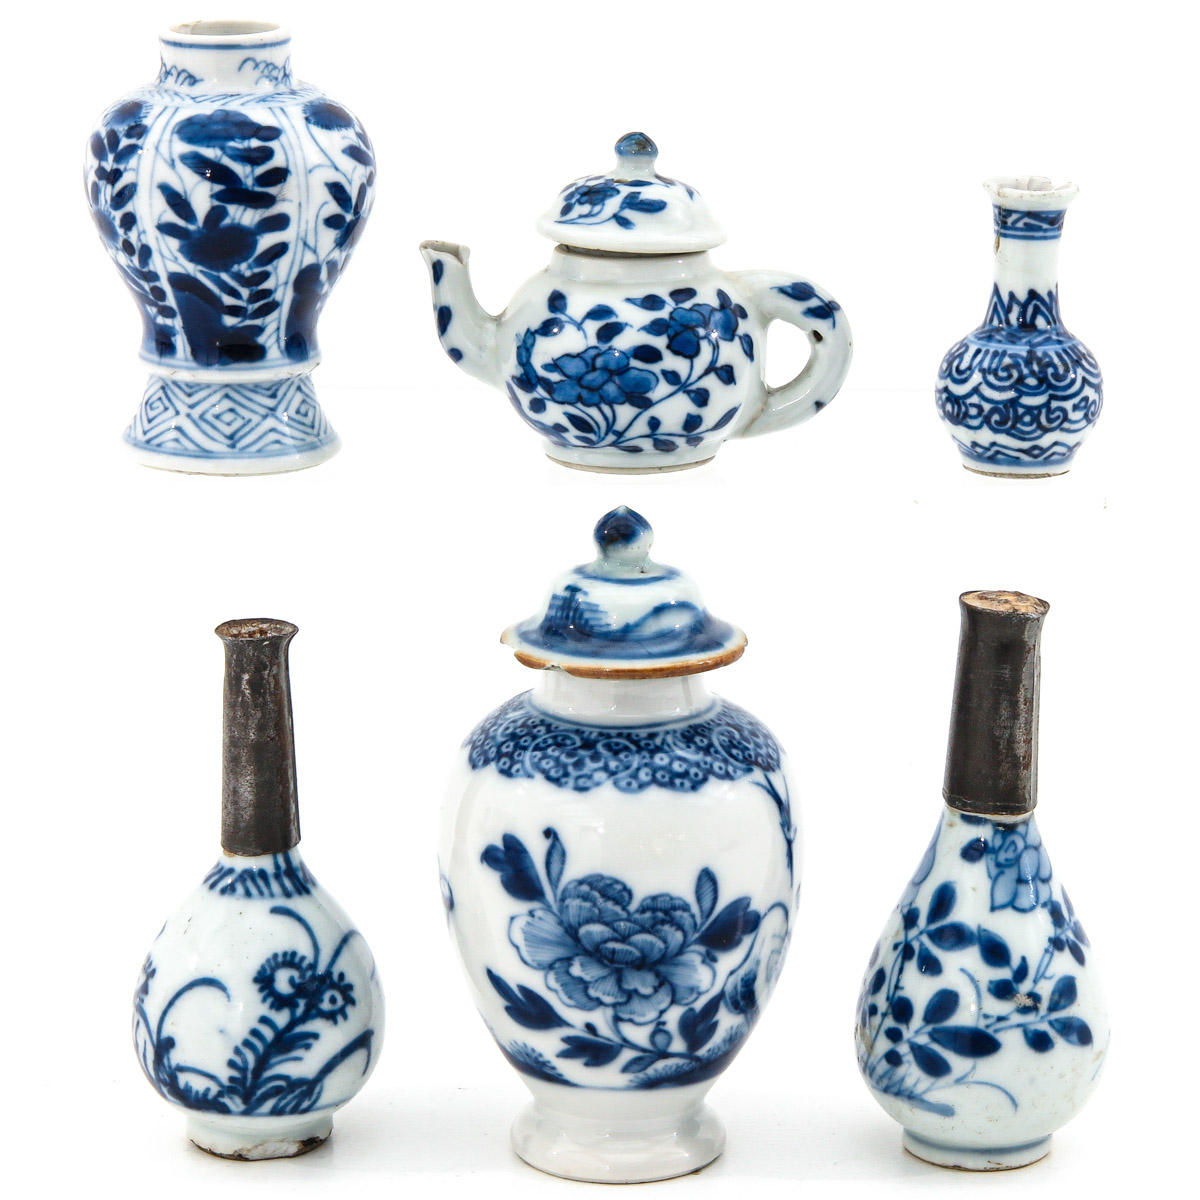 A Collection of Miniature Porcelain